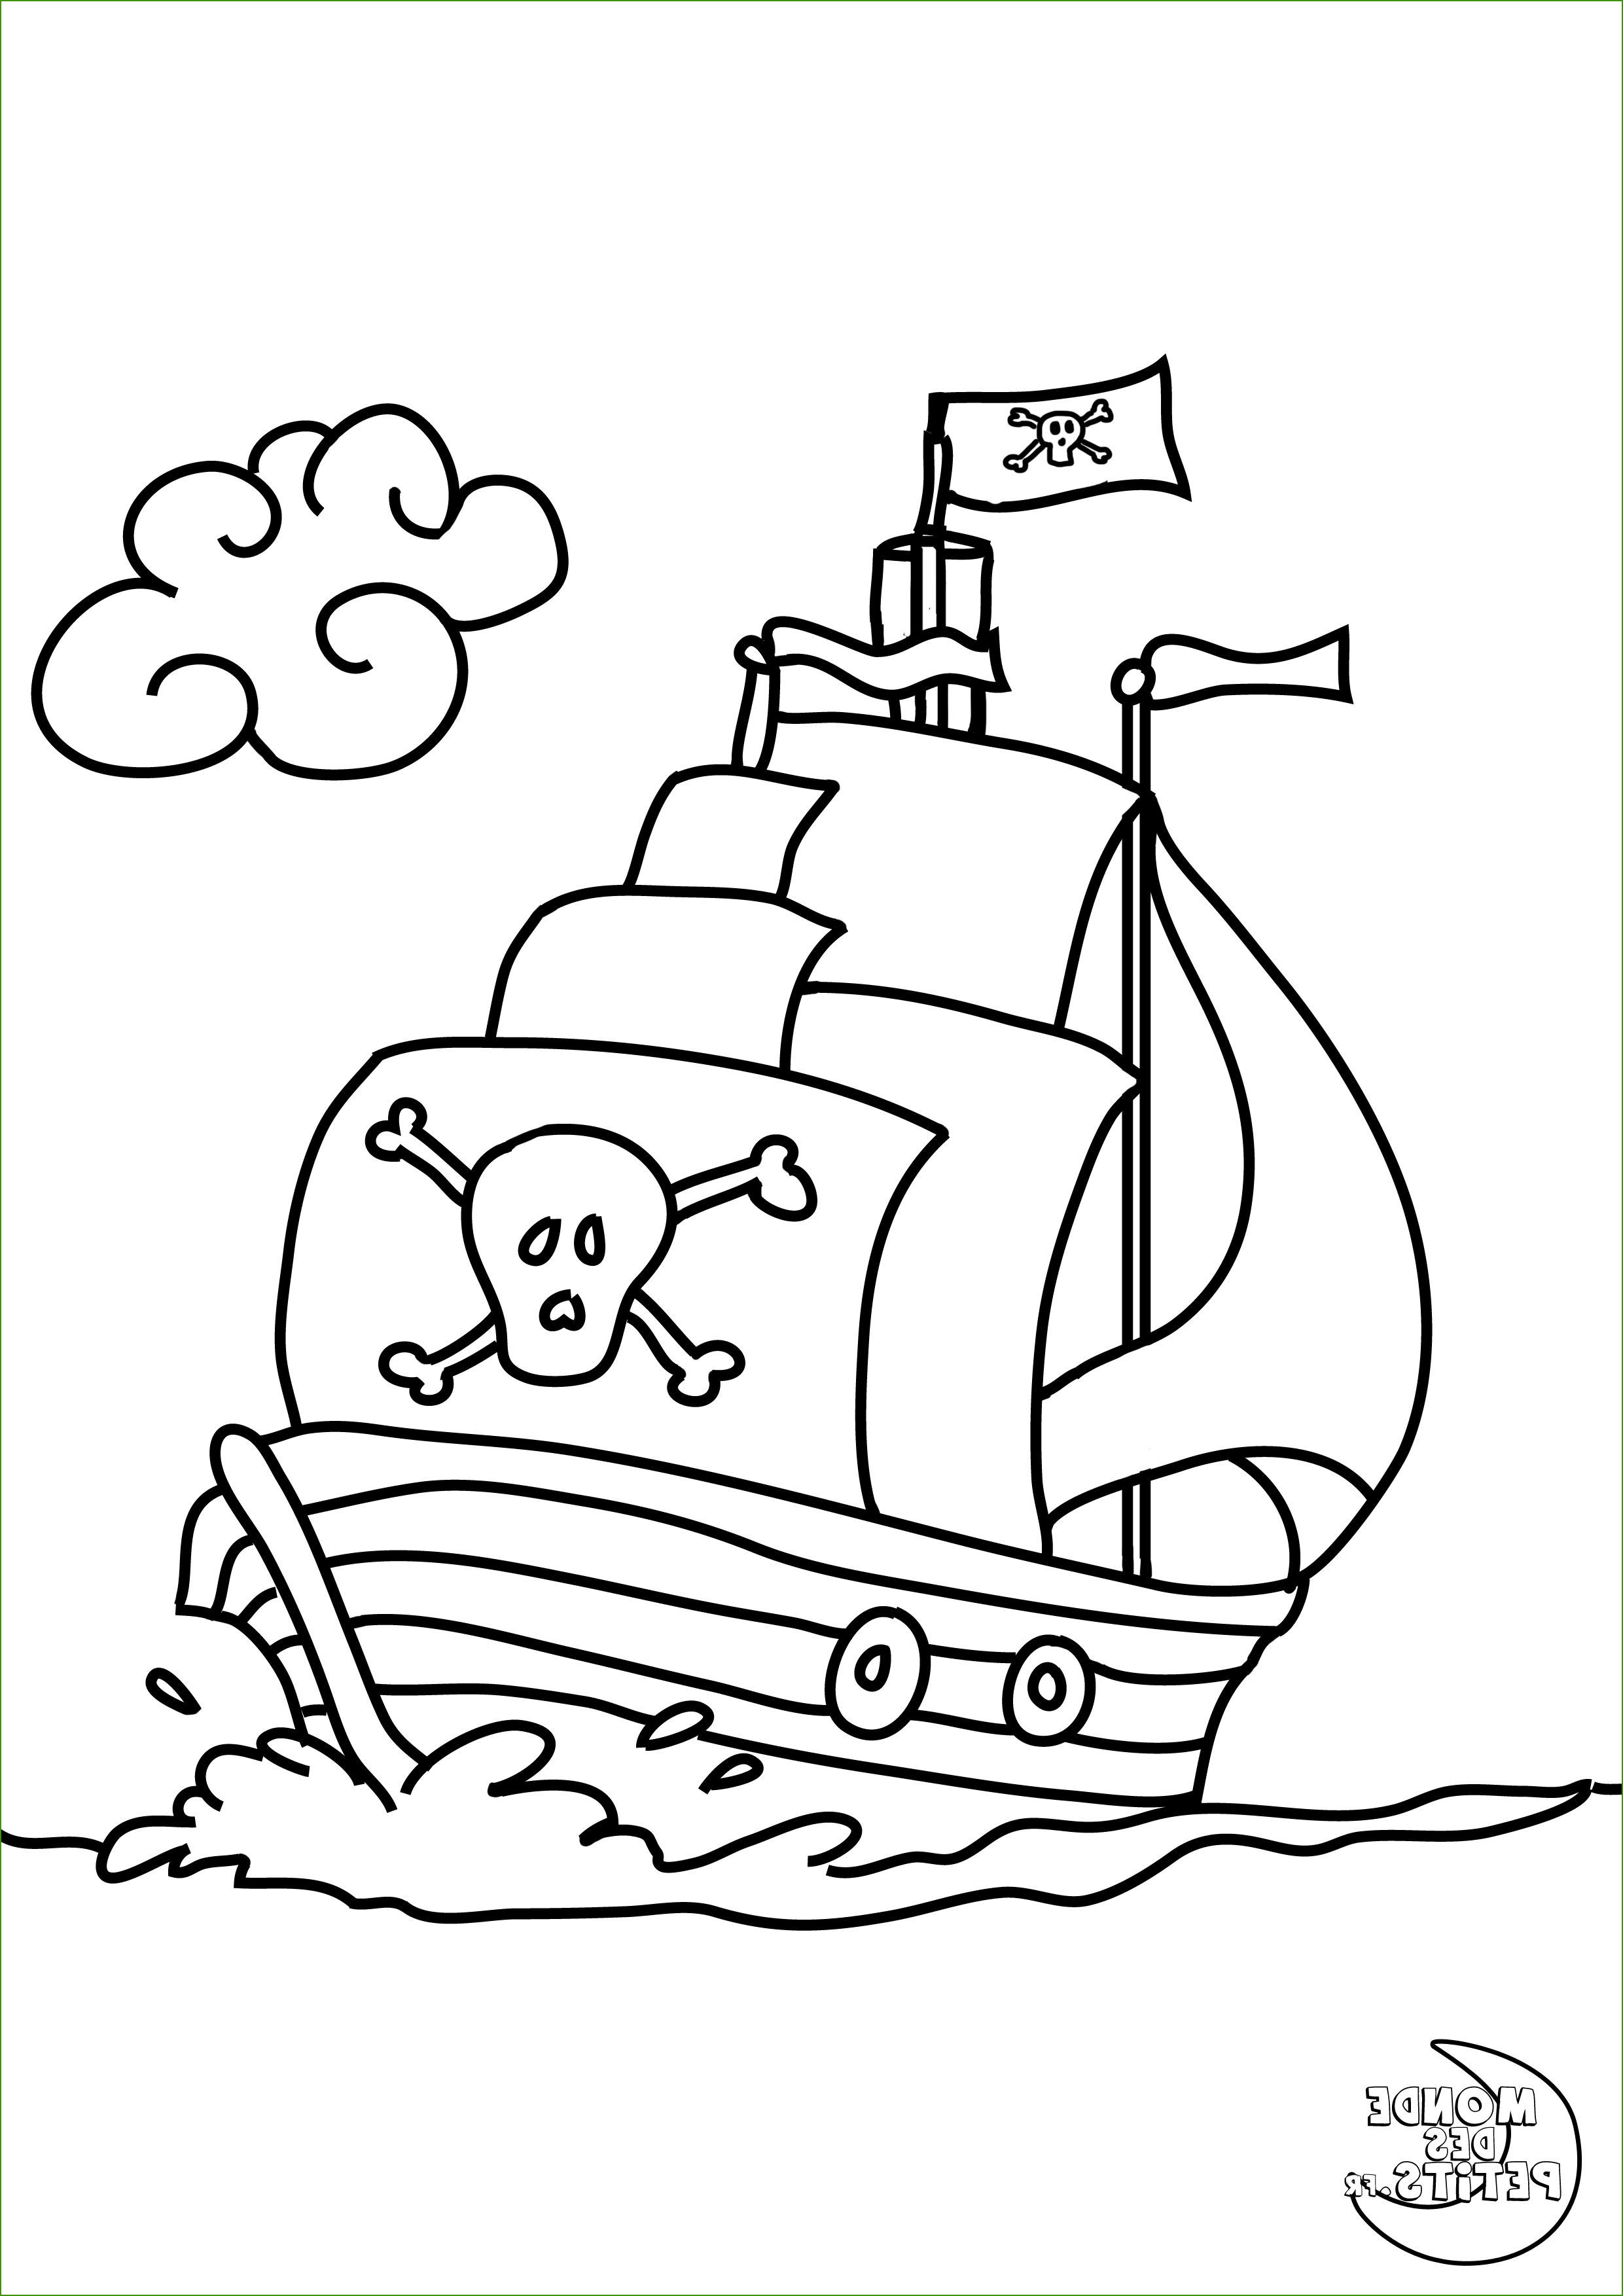 dessin bateau pirate facile fantastique coloriage pirate colorier dessin imprimer piraten